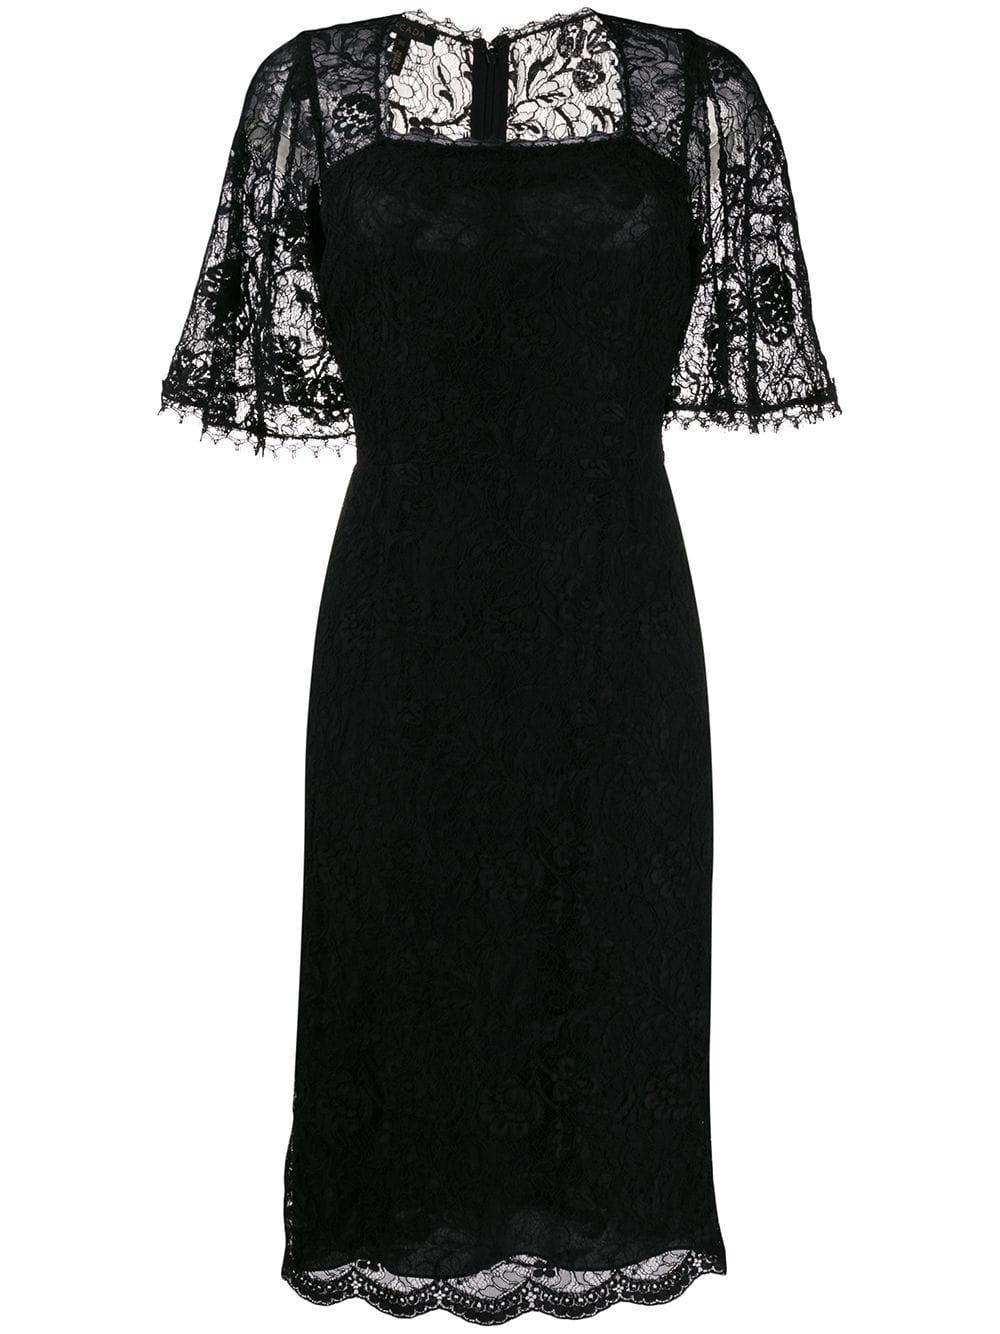 ESCADA Lace Panel Dress in Black - Lyst